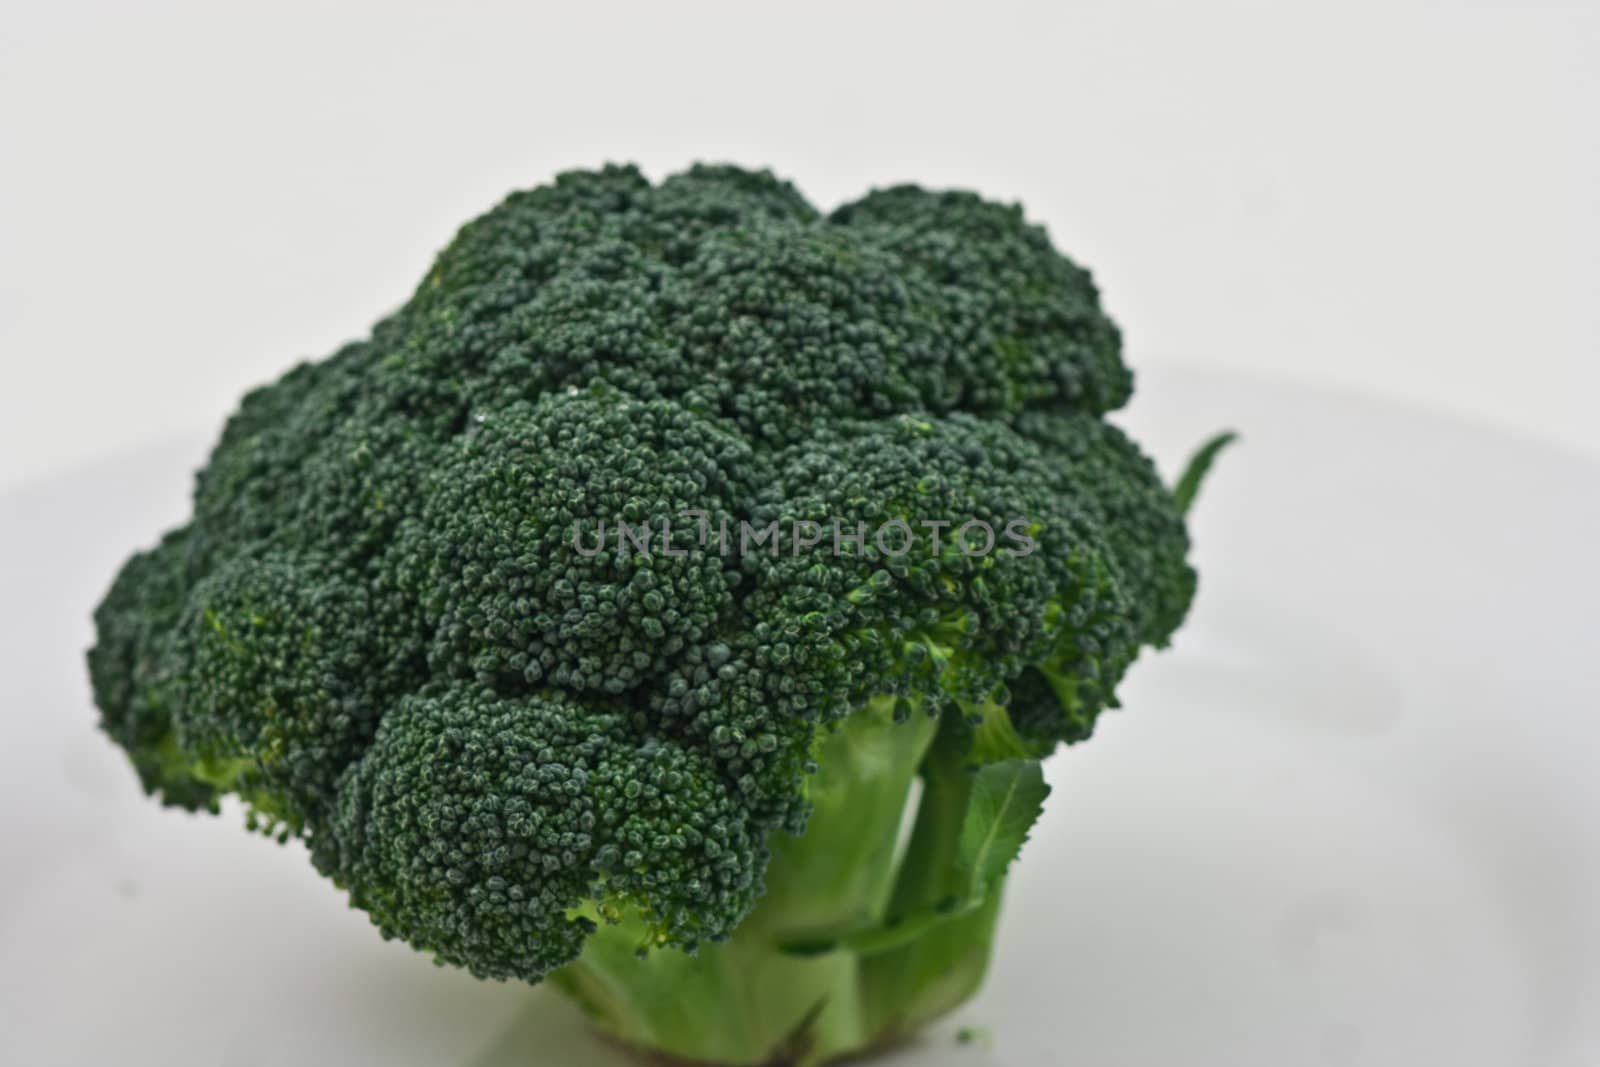 A single stalk of freshbroccoli on a white background